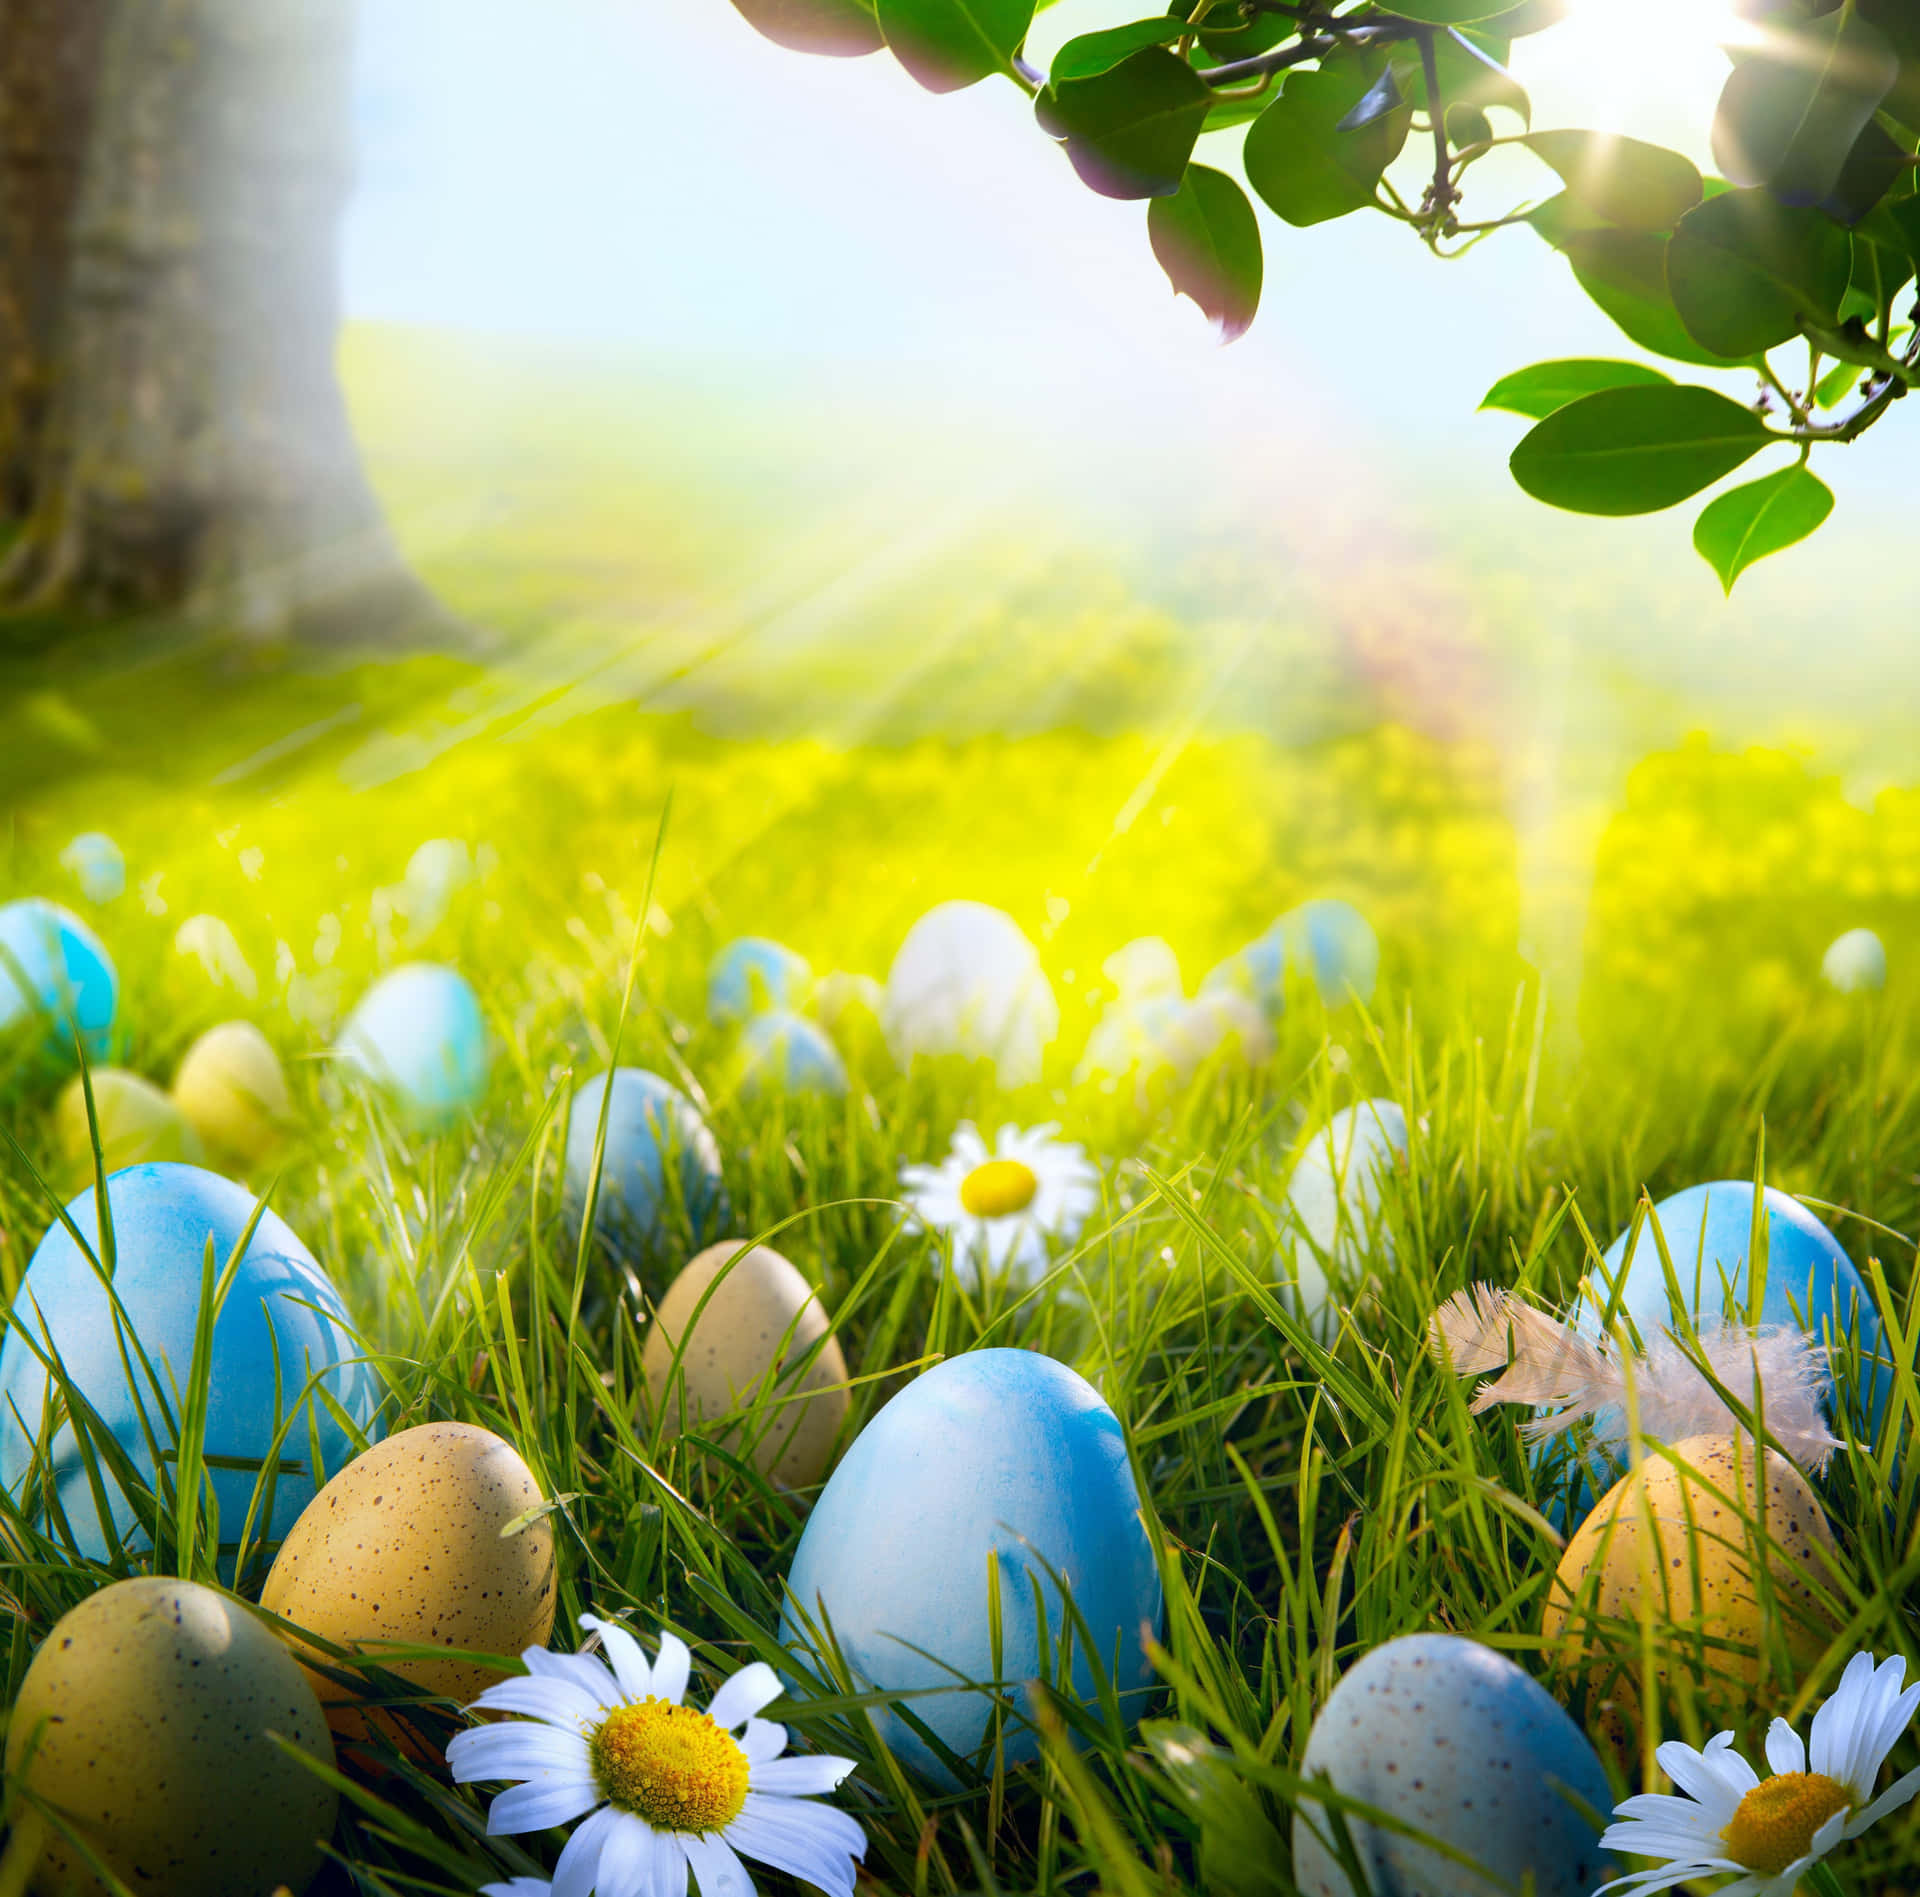 Joyful Symbols Of Easter